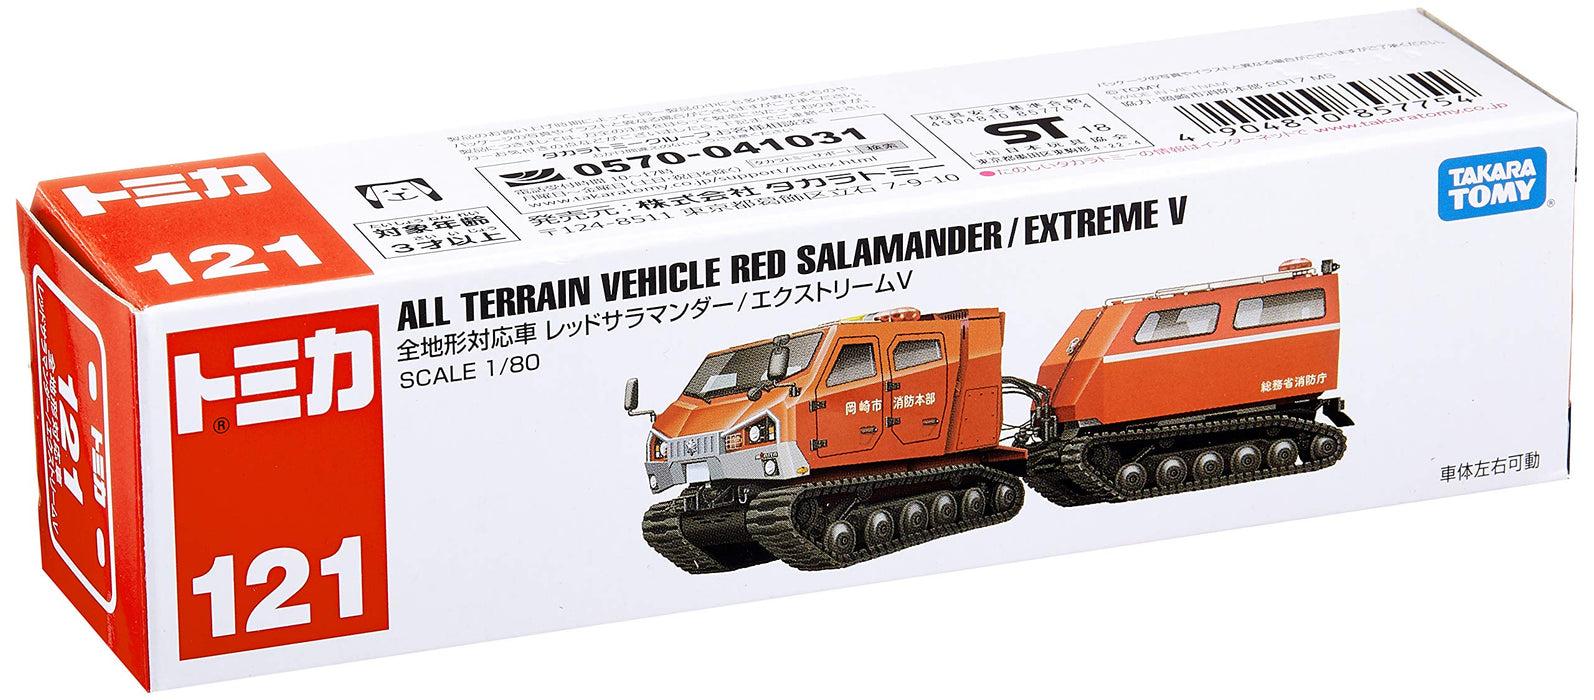 TAKARA TOMY Tomica Long 121 All Terrain Vehicle Red Salamander/Extreme V 857754